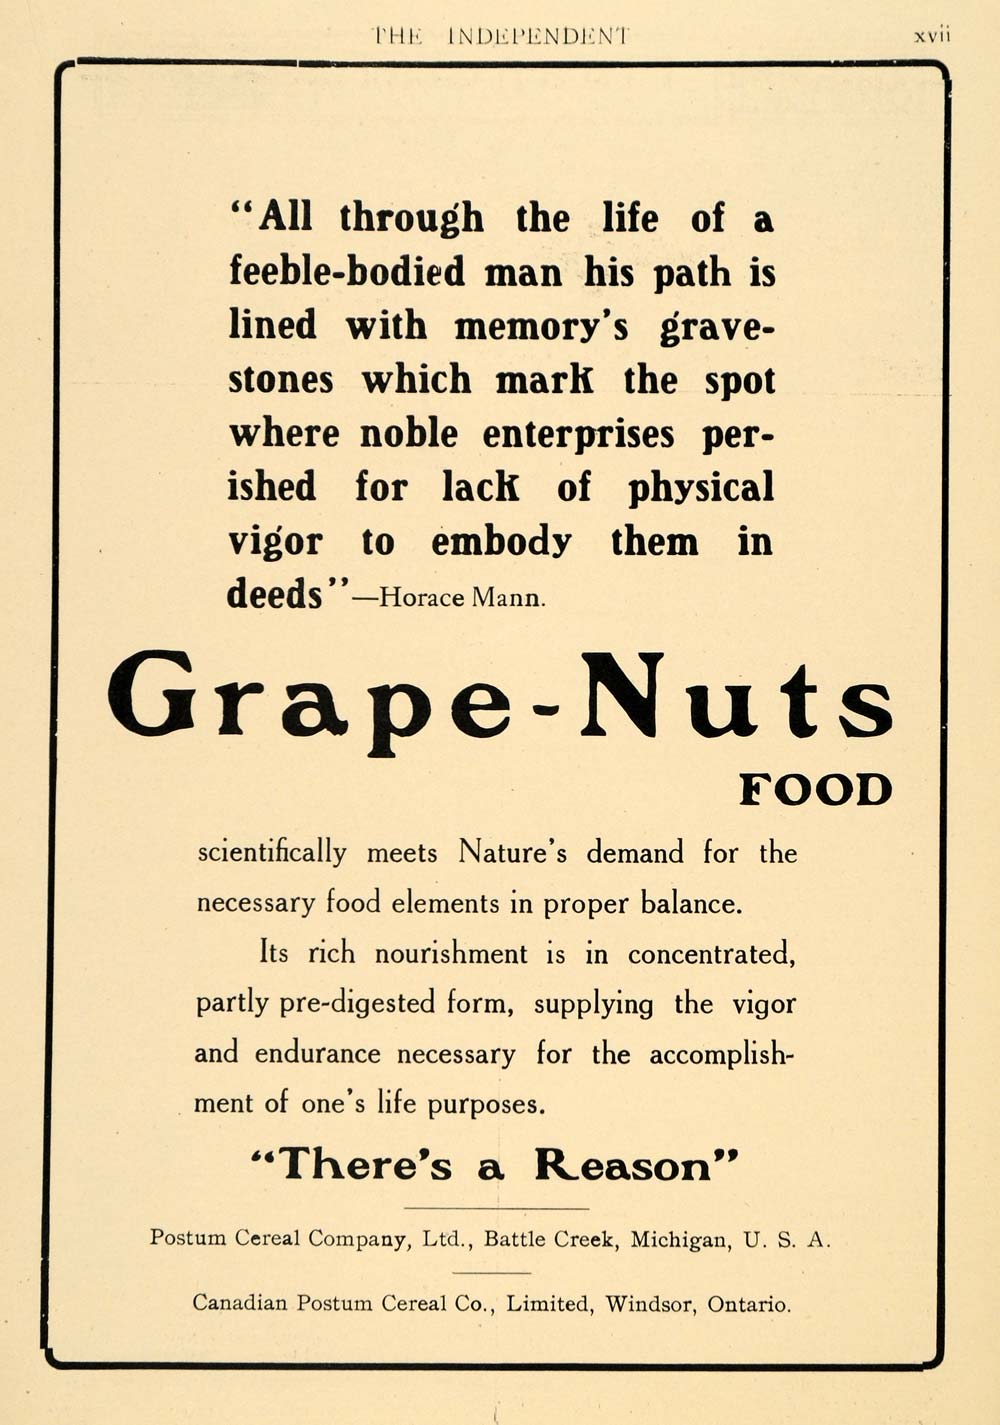 1911 Ad Postum Cereal Co. Grape-Nuts Breakfast Food - ORIGINAL ADVERTISING TIN5